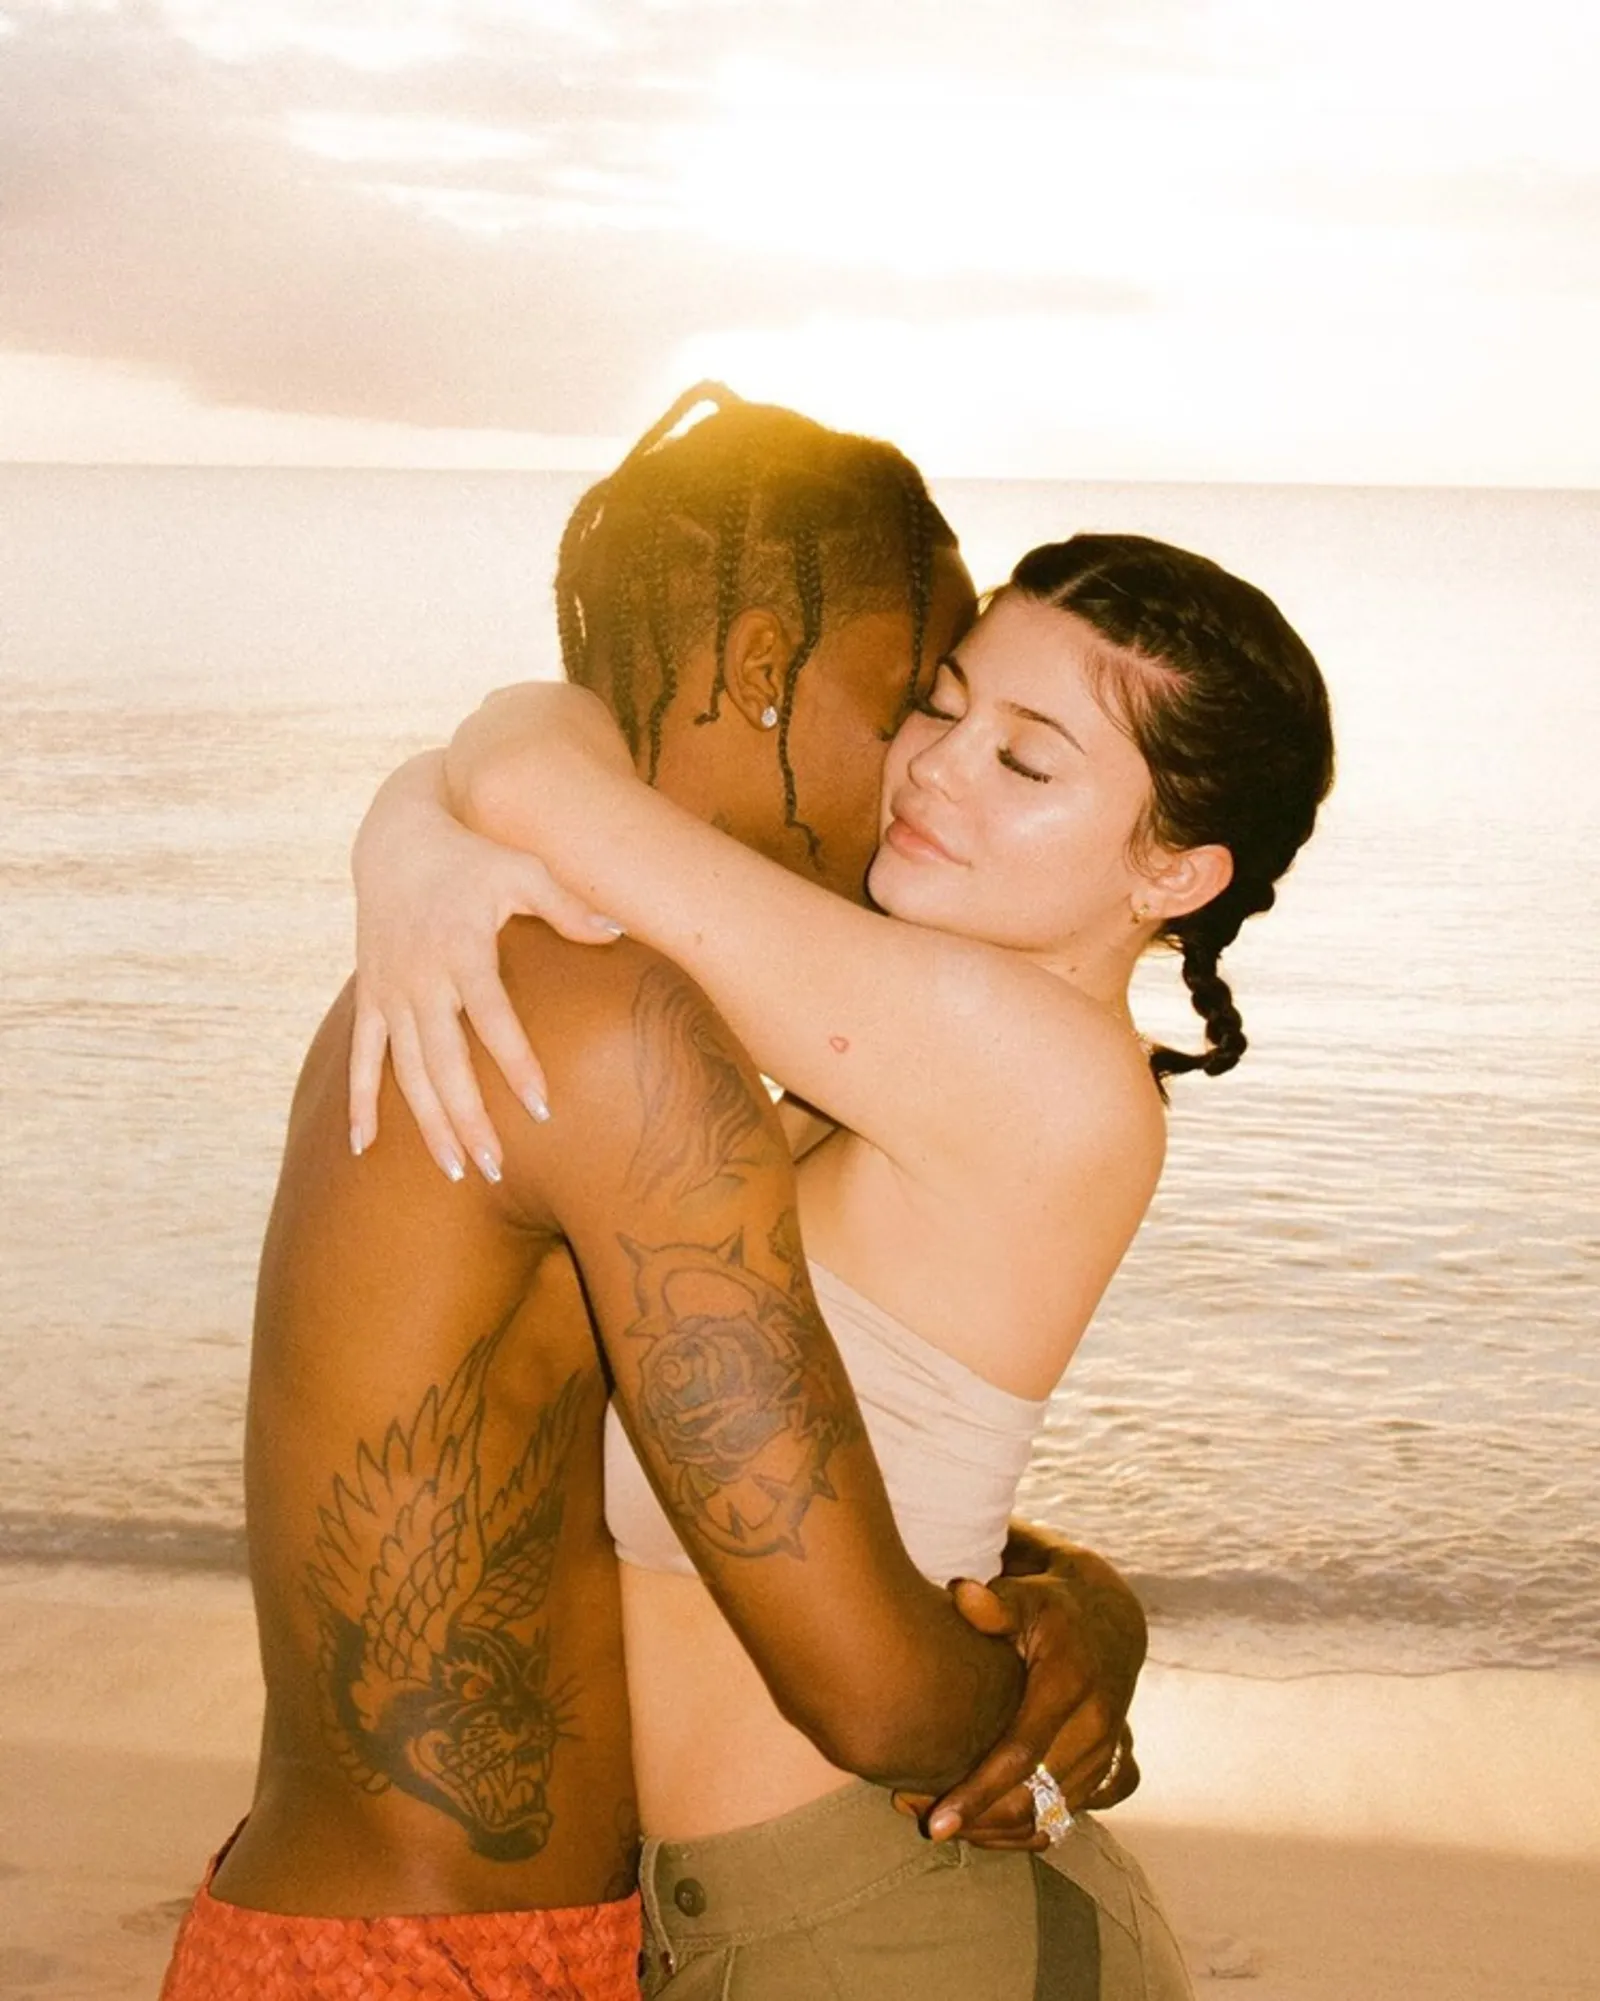 CLBK, Begini Perjalanan Cinta Kylie Jenner & Travis Scott yang Berliku